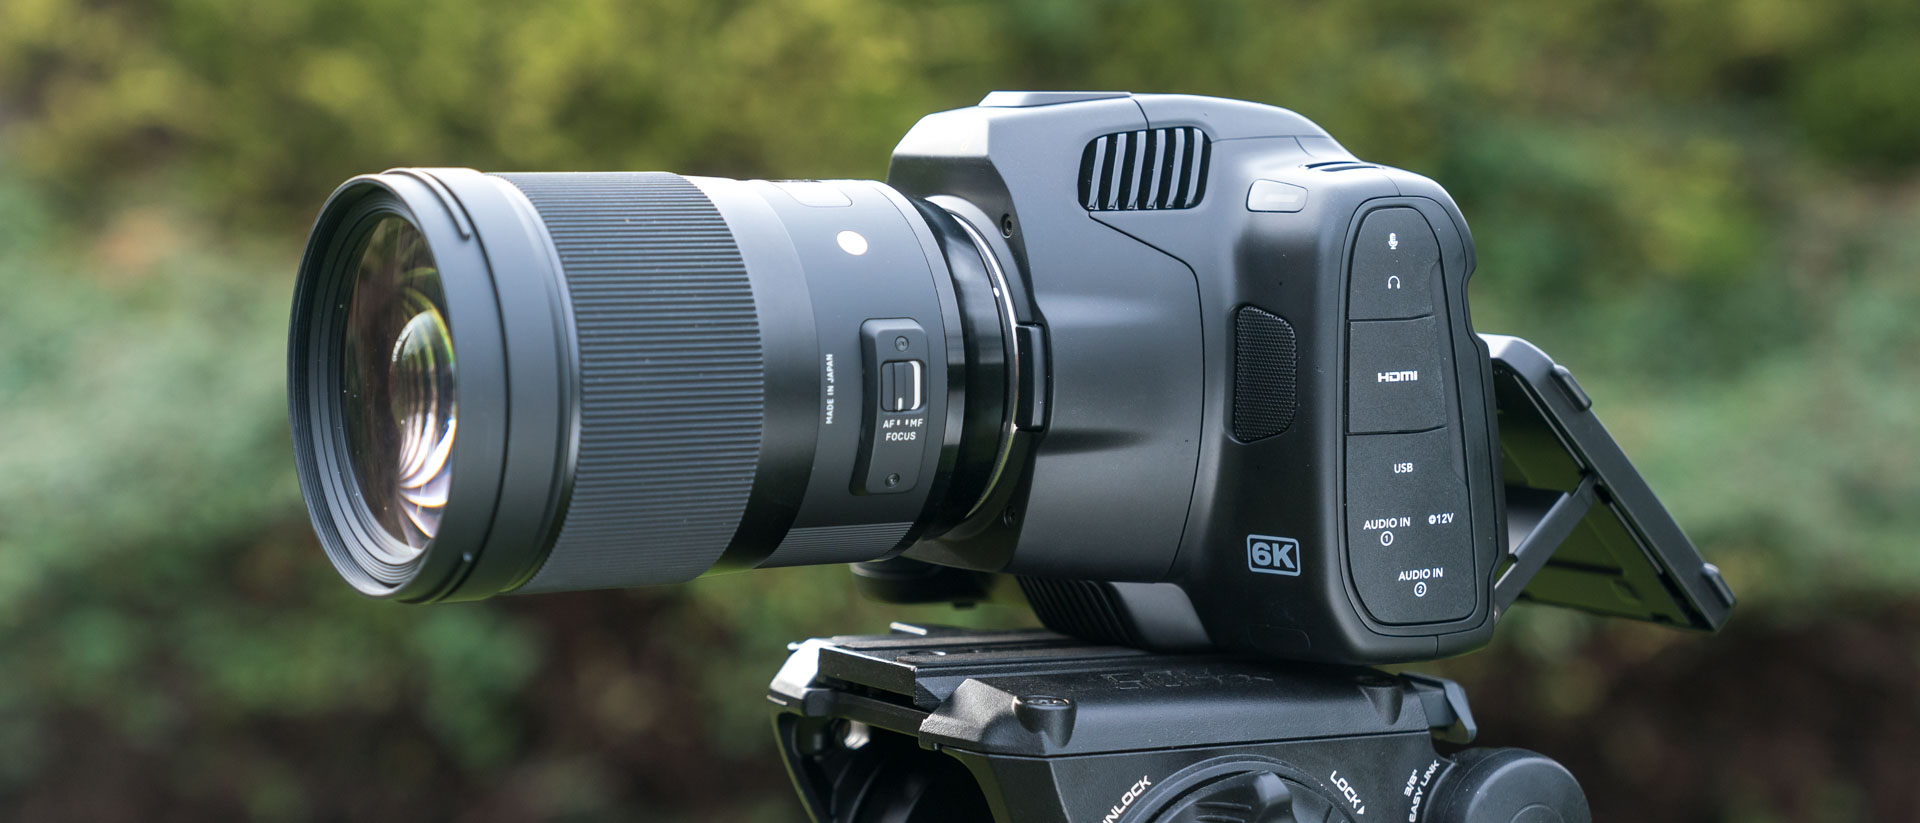 Why I Chose the Blackmagic Design Pocket Cinema Camera 6K Pro